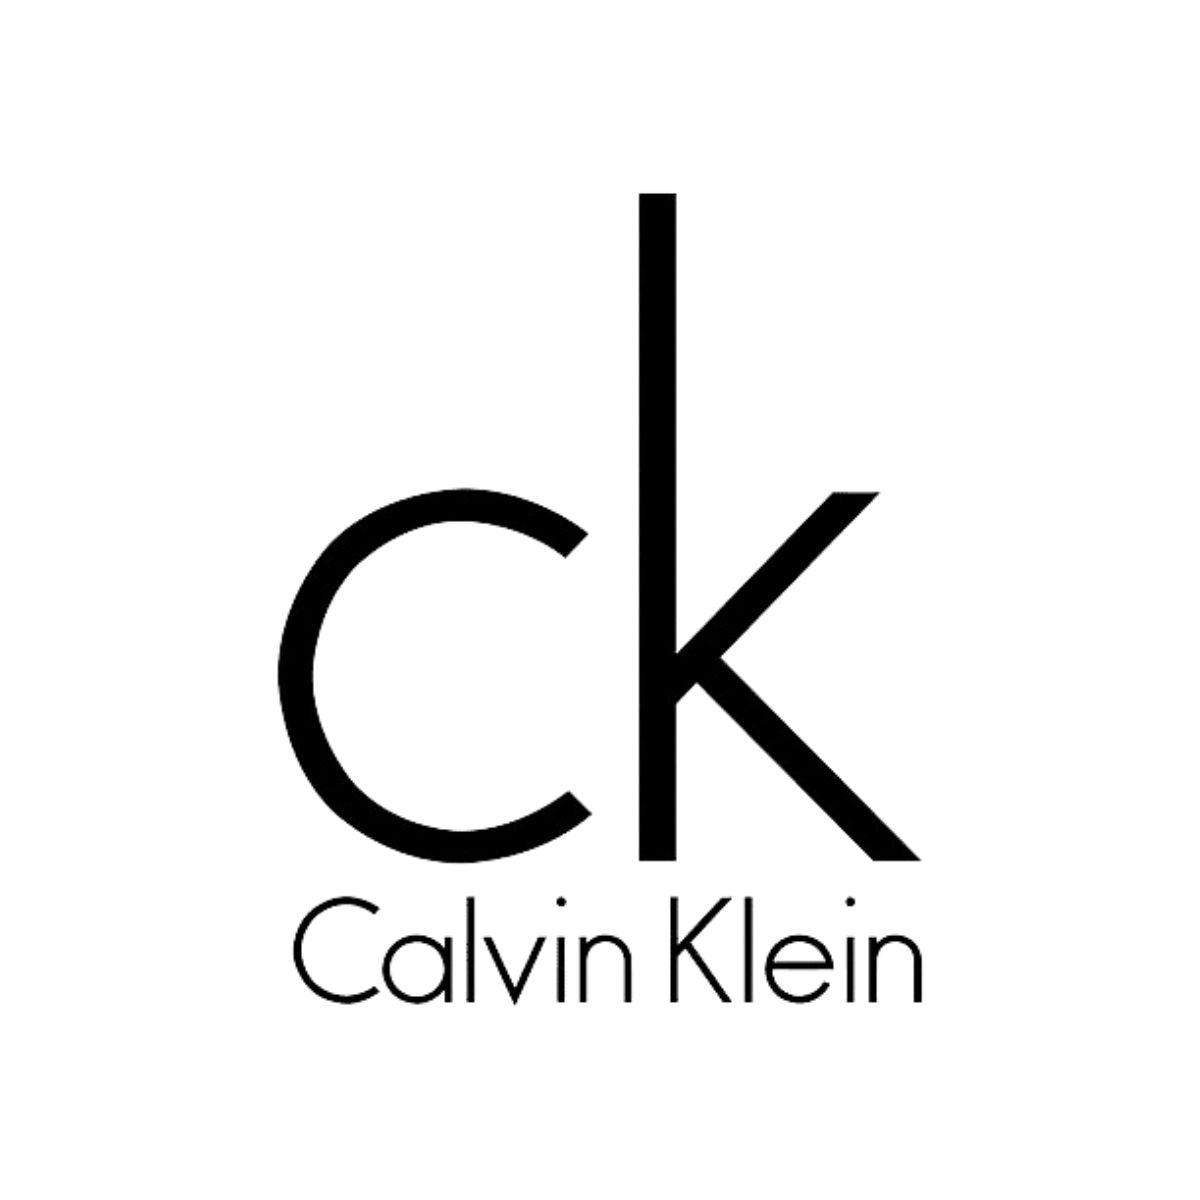 "Calvin Klein premium eyewear brands sunglasses, spectacles, optical frames lenses at optorium"